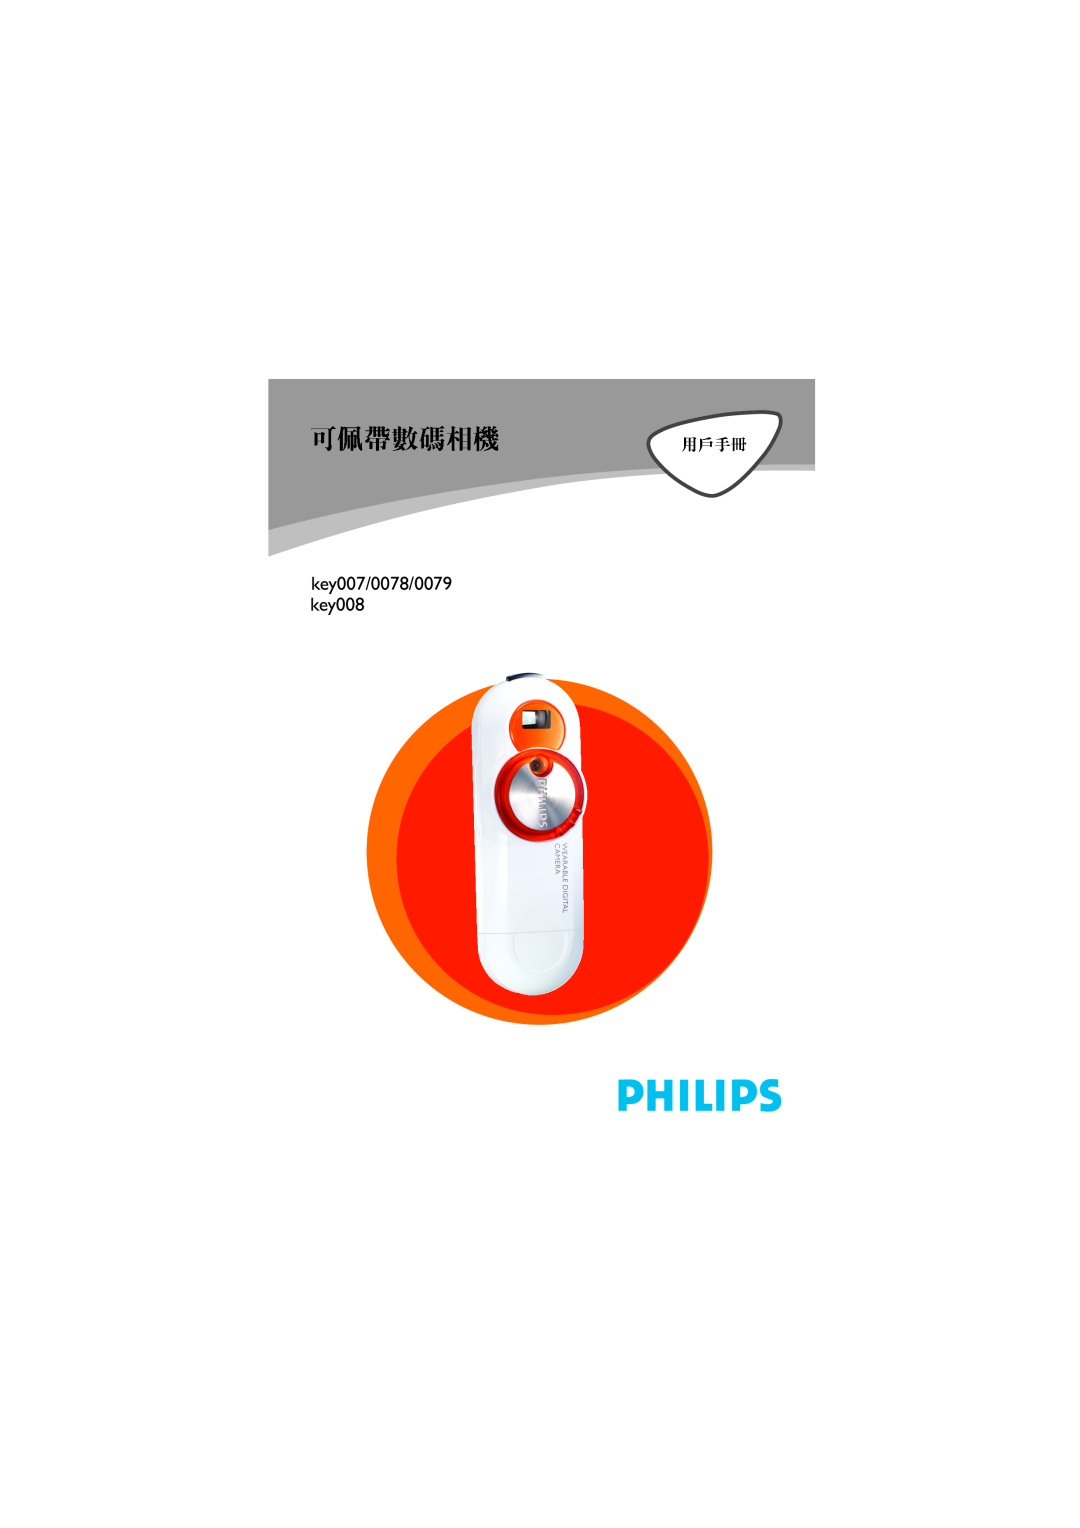 Philips KEY008, KEY0079, KEY0078 user manual wearable digital camera, key007/ 0078/ 0079 key008 